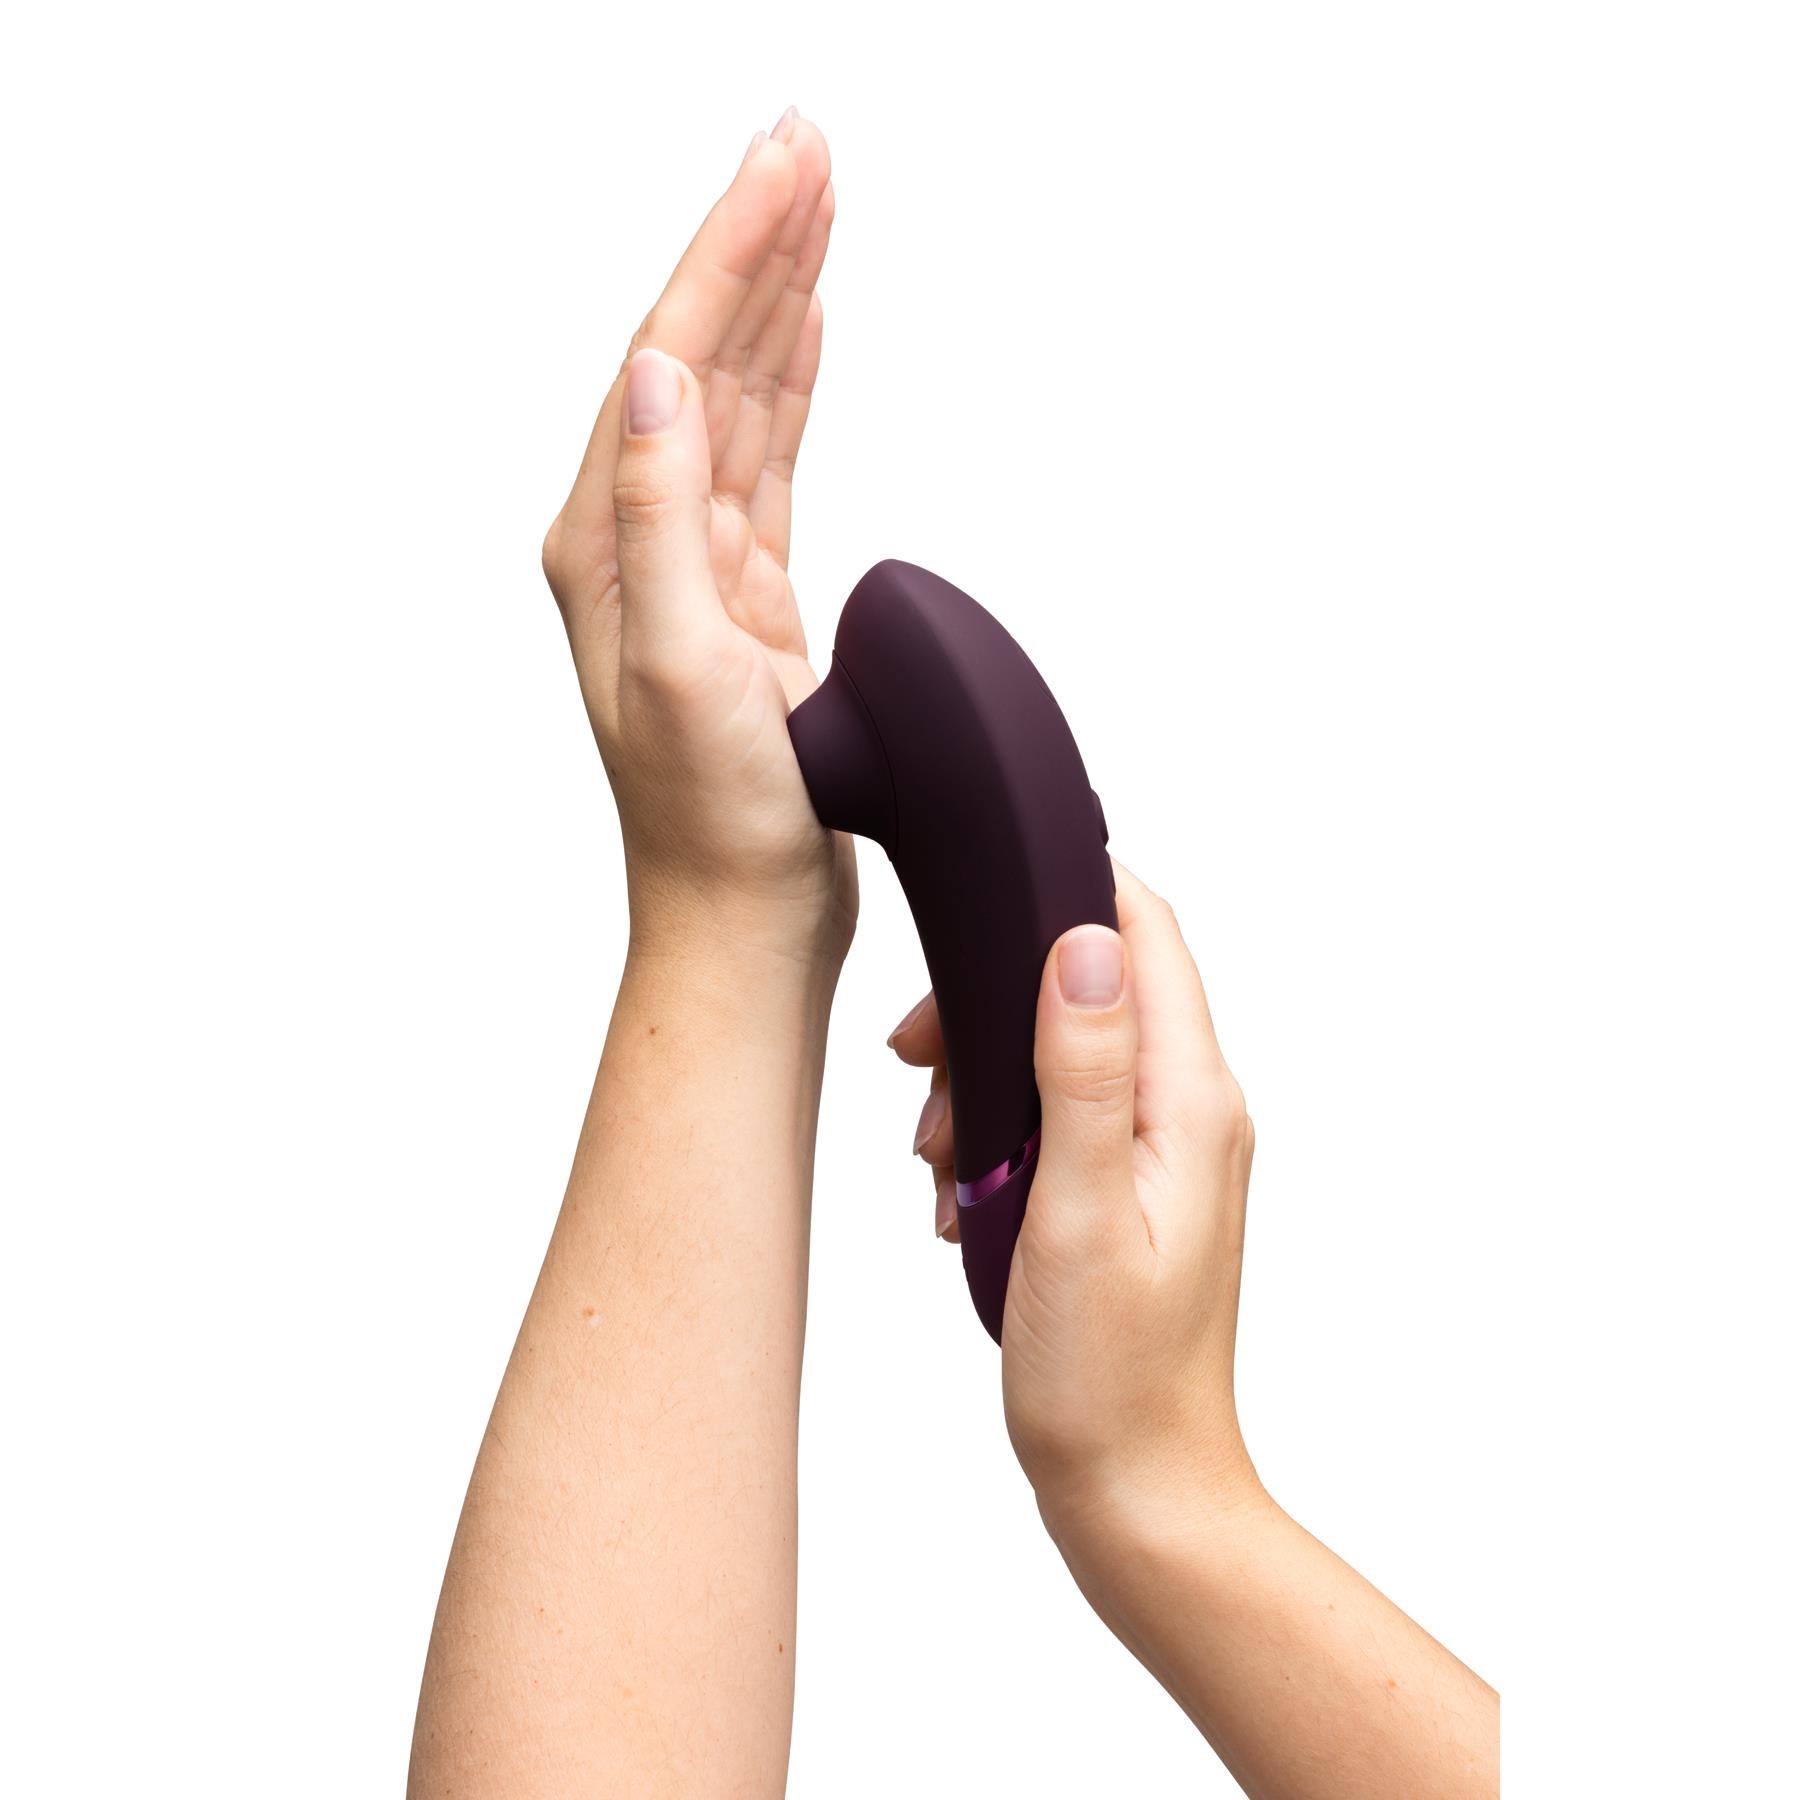 Womanizer Next Pleasure Air Clitoral Stimulator- Hand Shot to Show Size